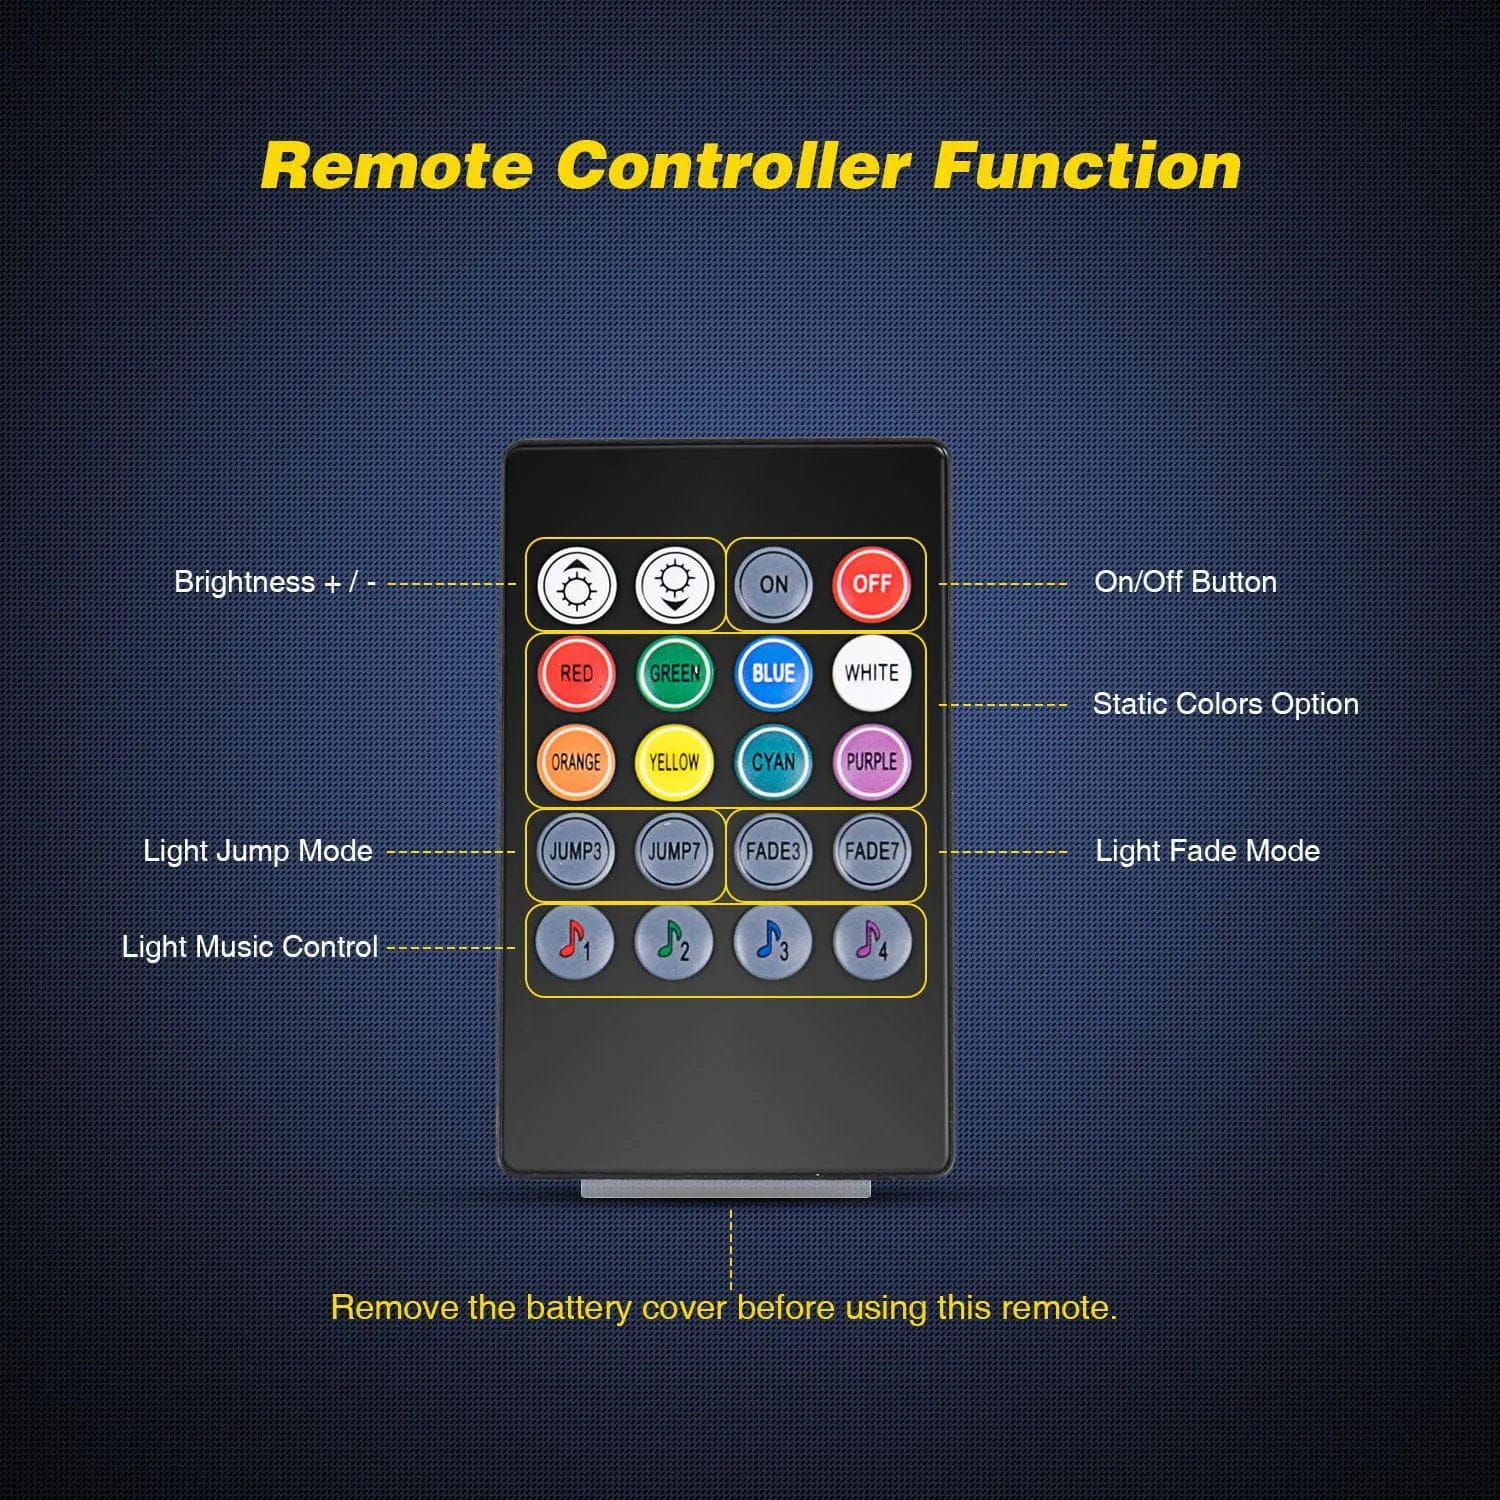 RGB Rock Lights 48Leds RGB Interior Light Strip Remote Control 4PCS